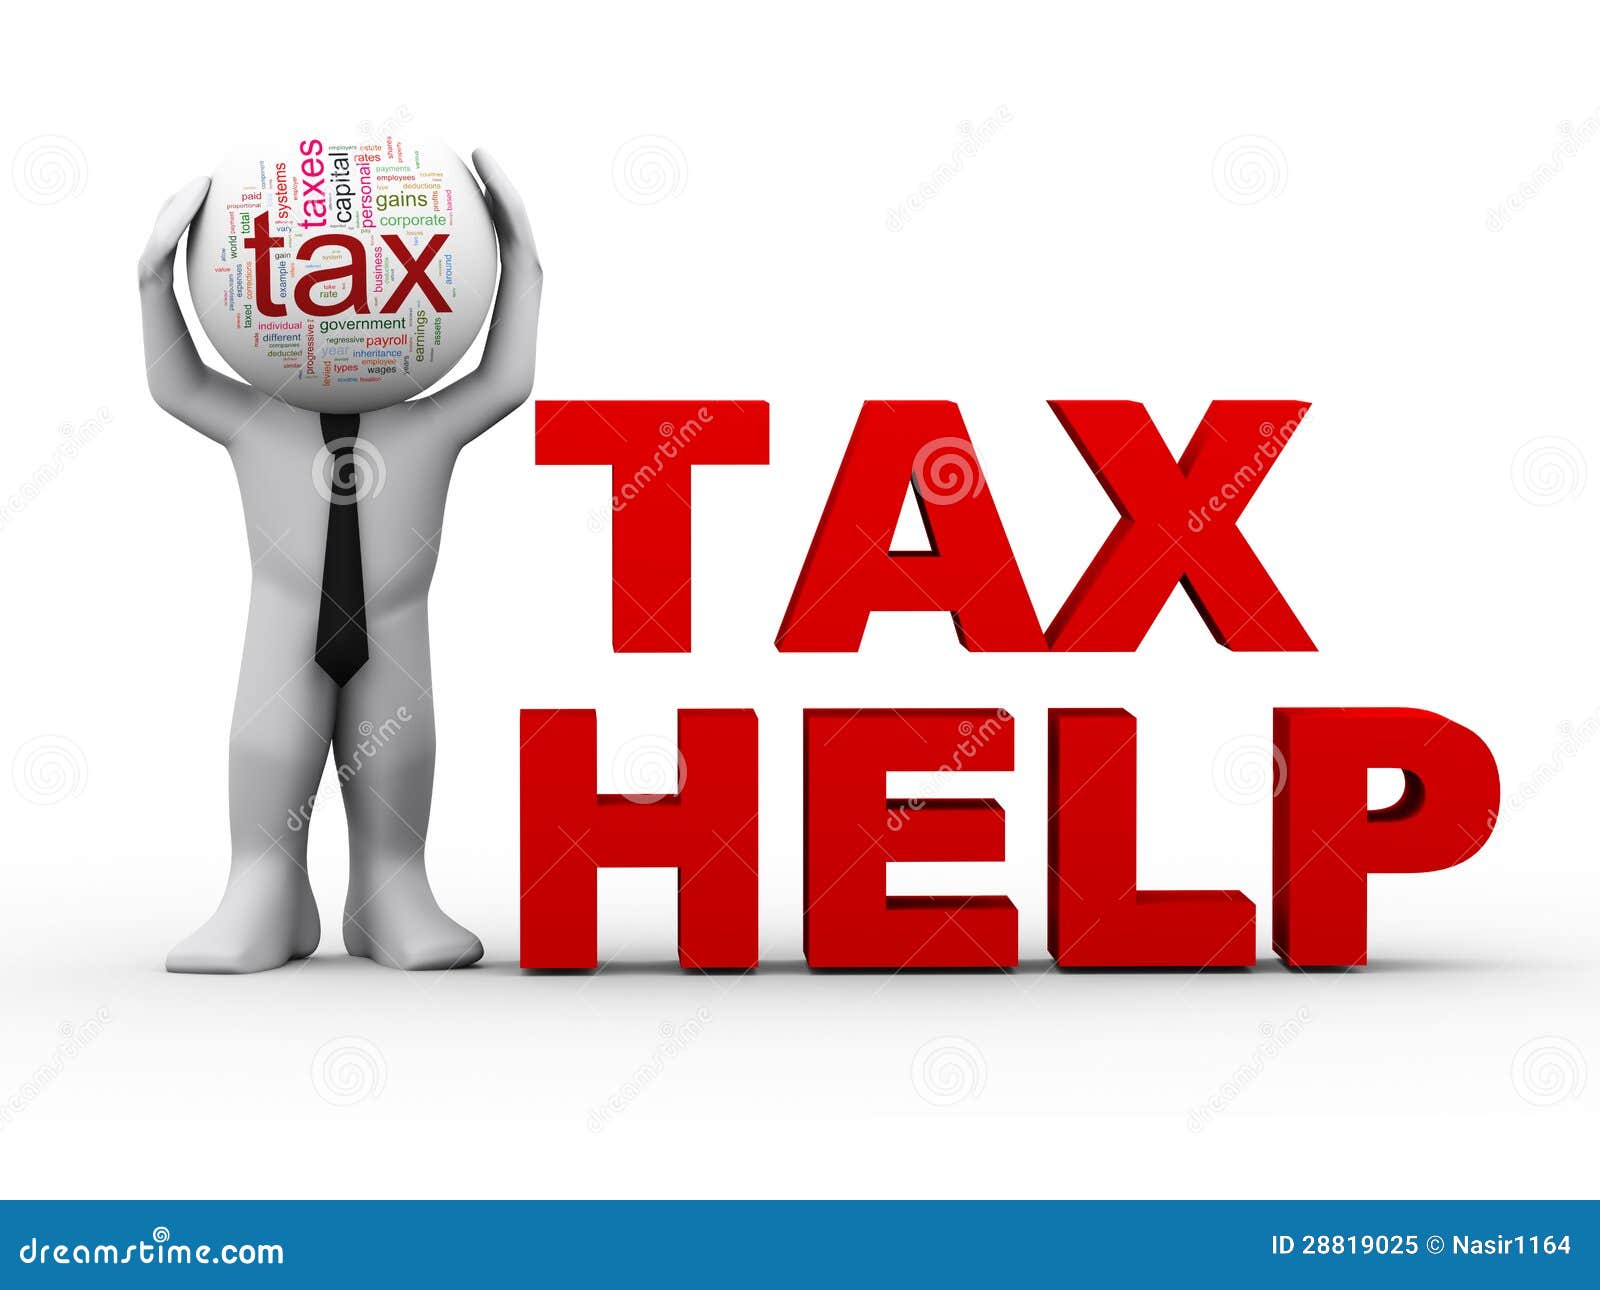 Free Tax Return Preparation for Qualifying Taxpayers